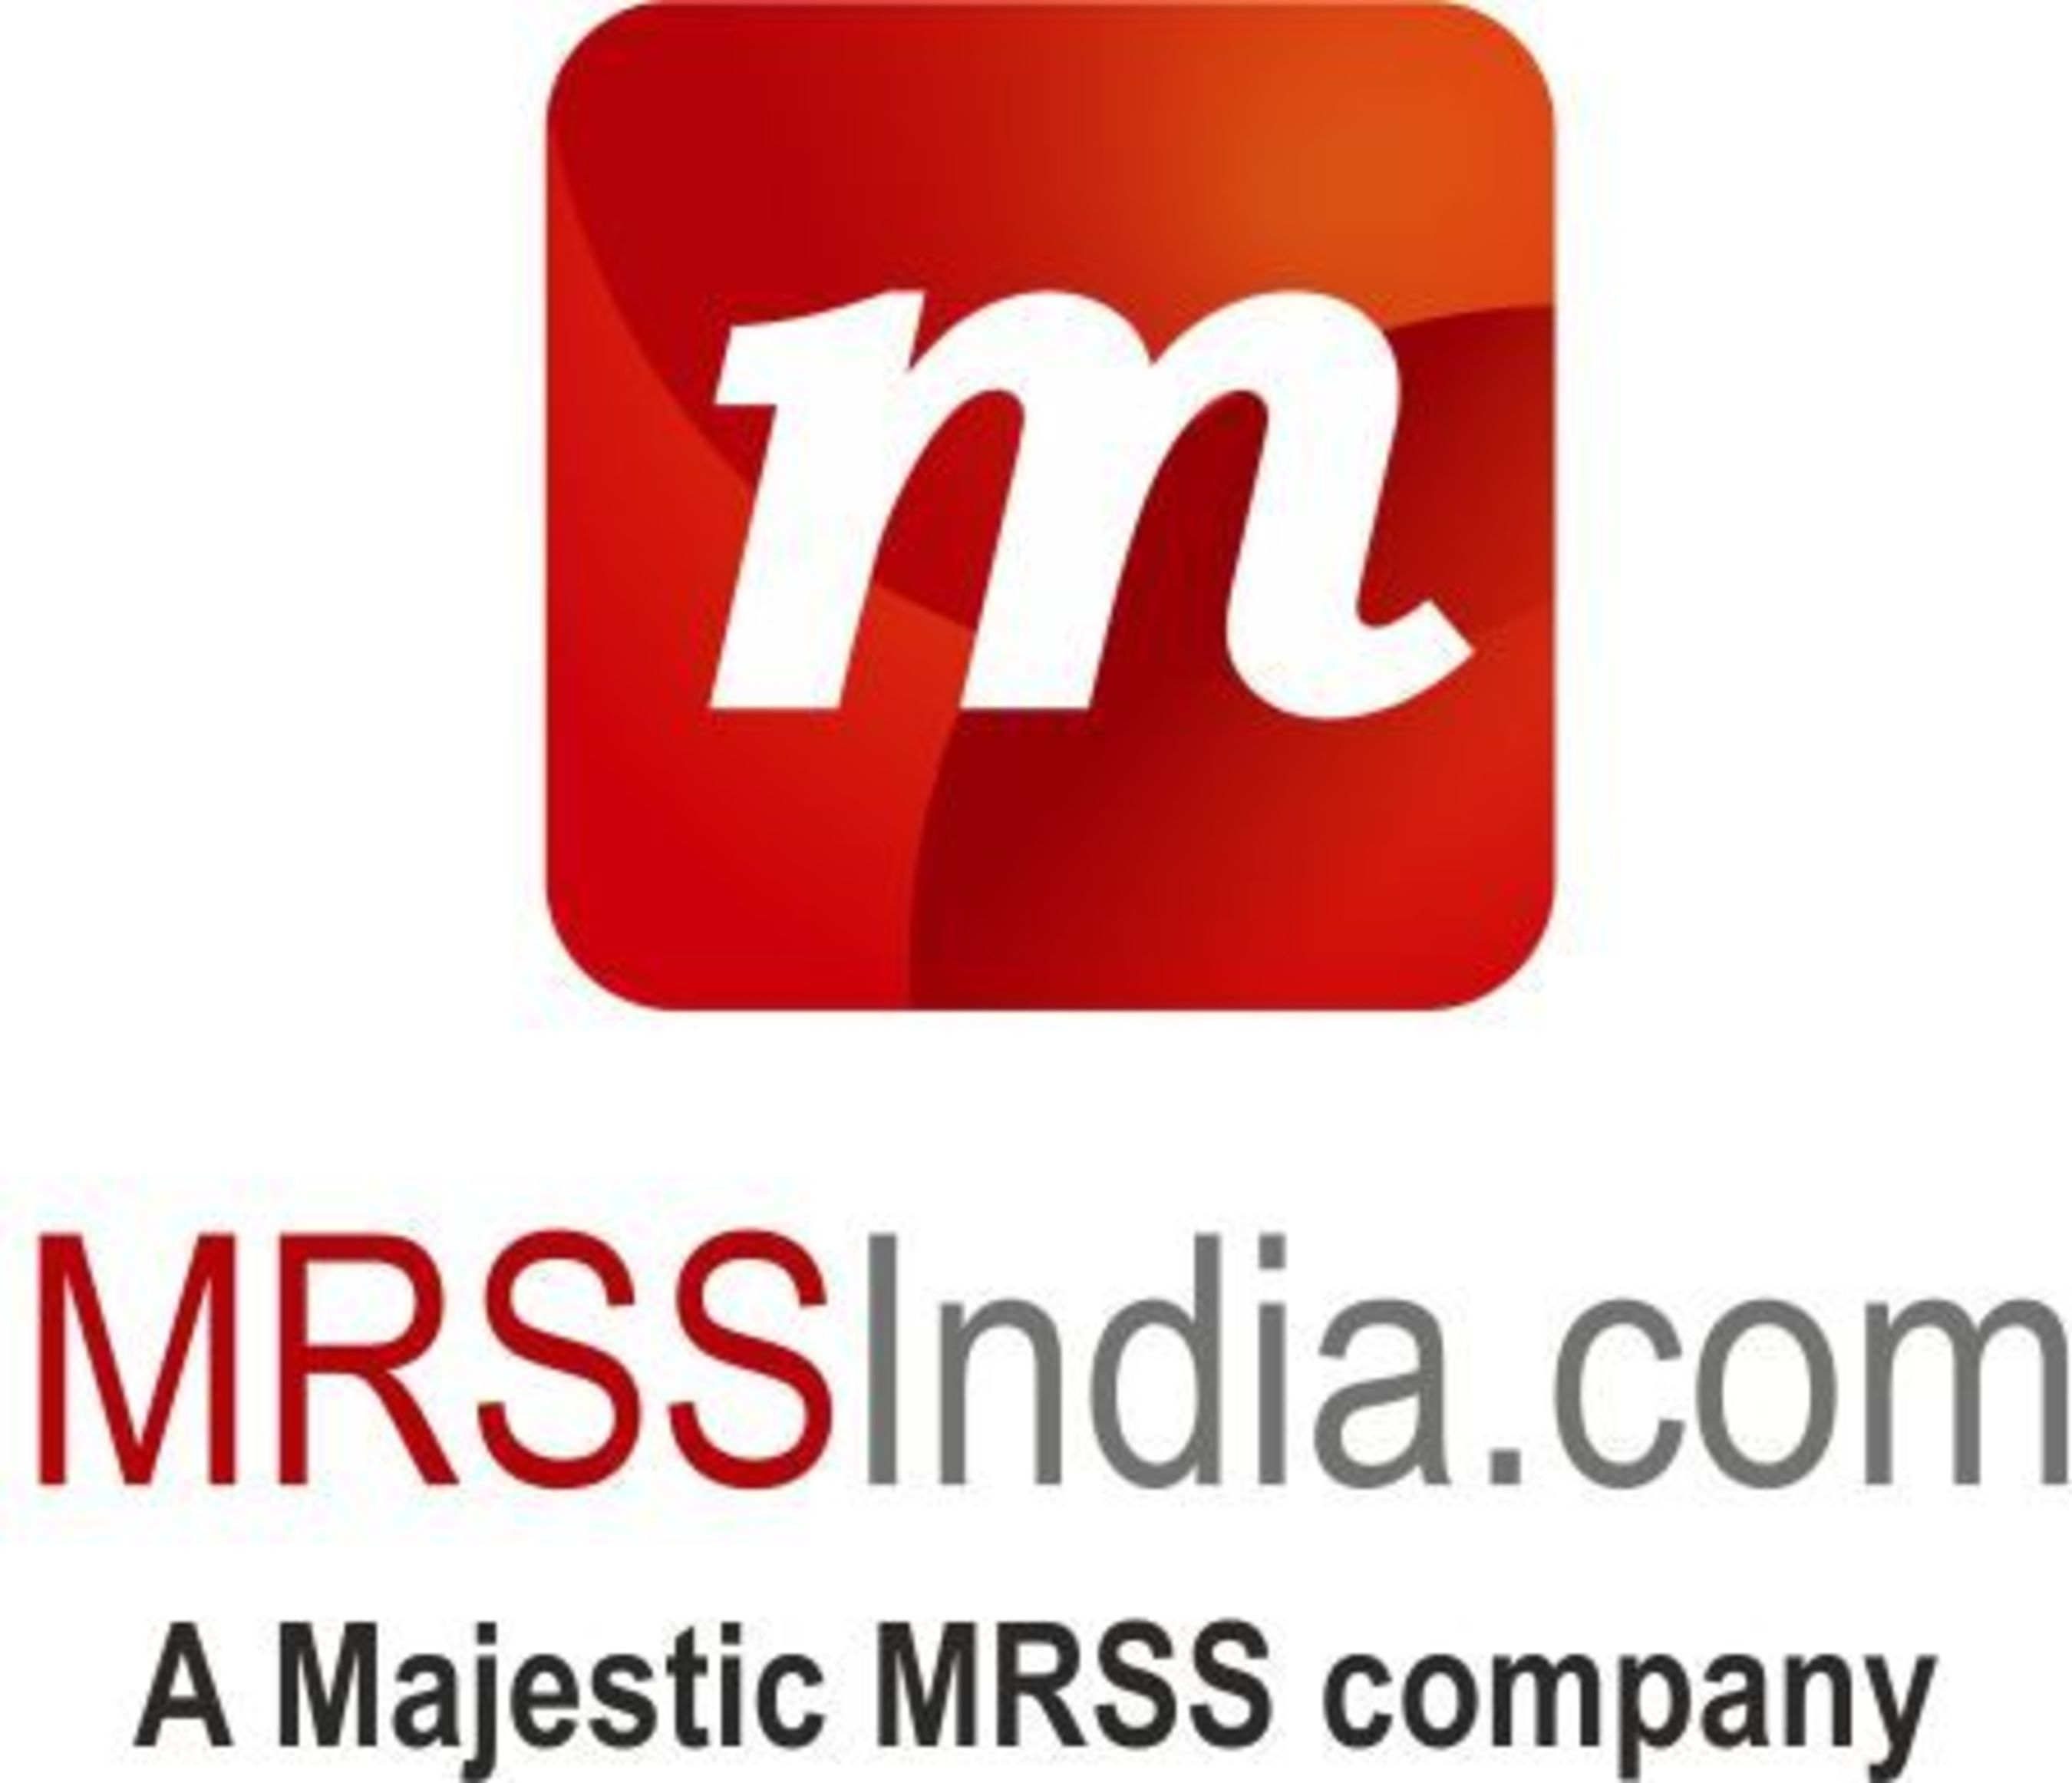 PR NEWSWIRE INDIA - Majestic MRSS Logo (PRNewsFoto/Majestic MRSS)